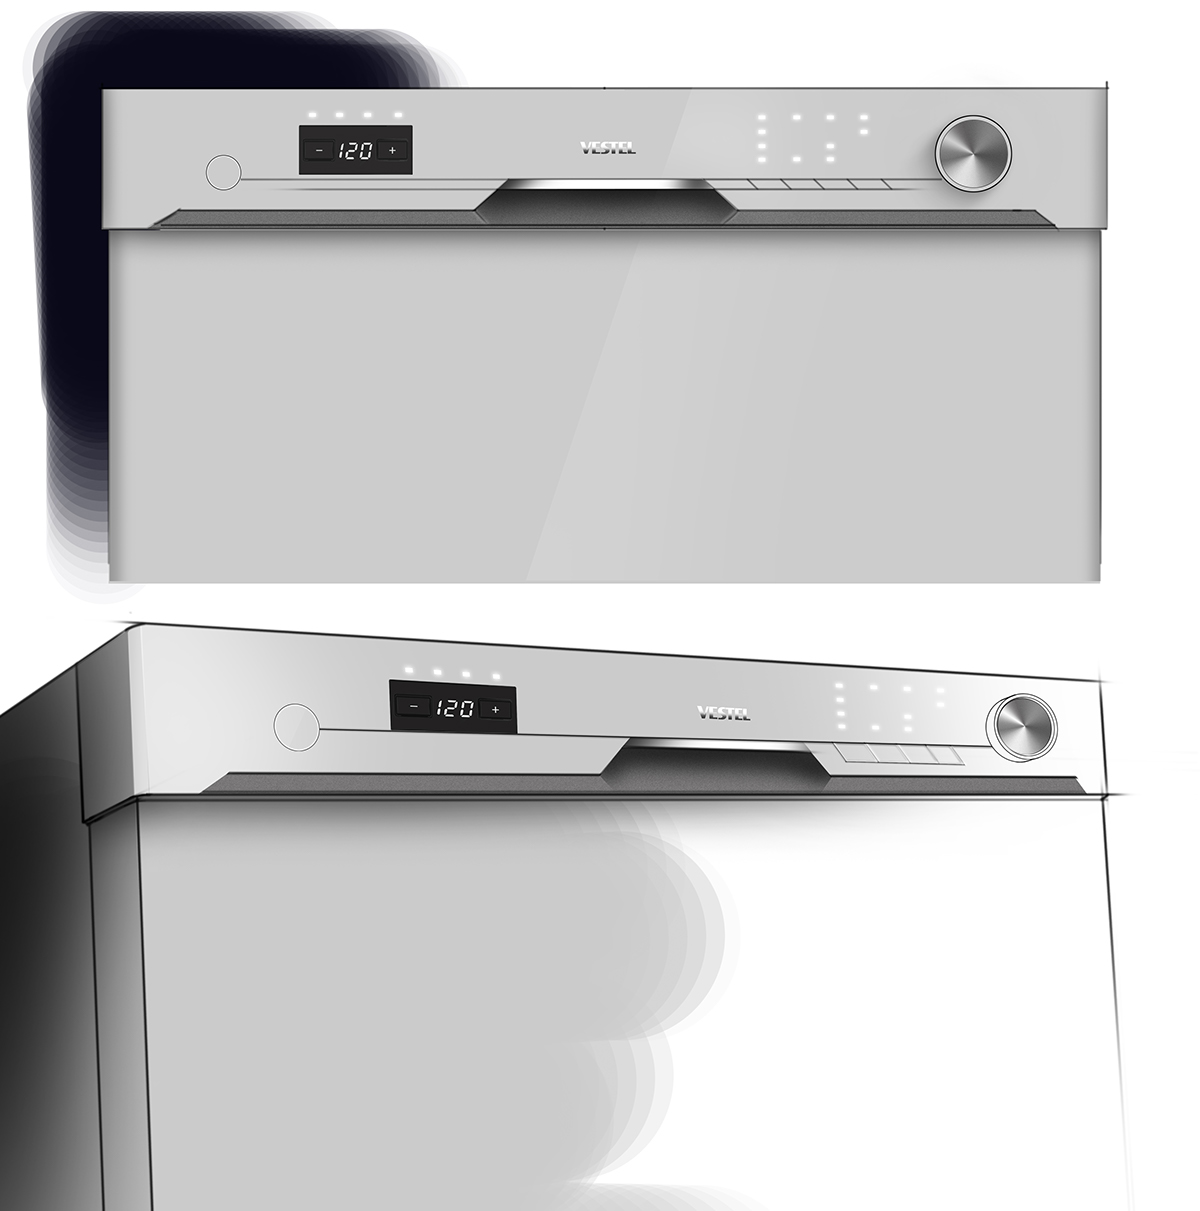 dishwasher sketching photoshop rendering whitegoods Accessory refrigerator sketch idsketching washingmachine